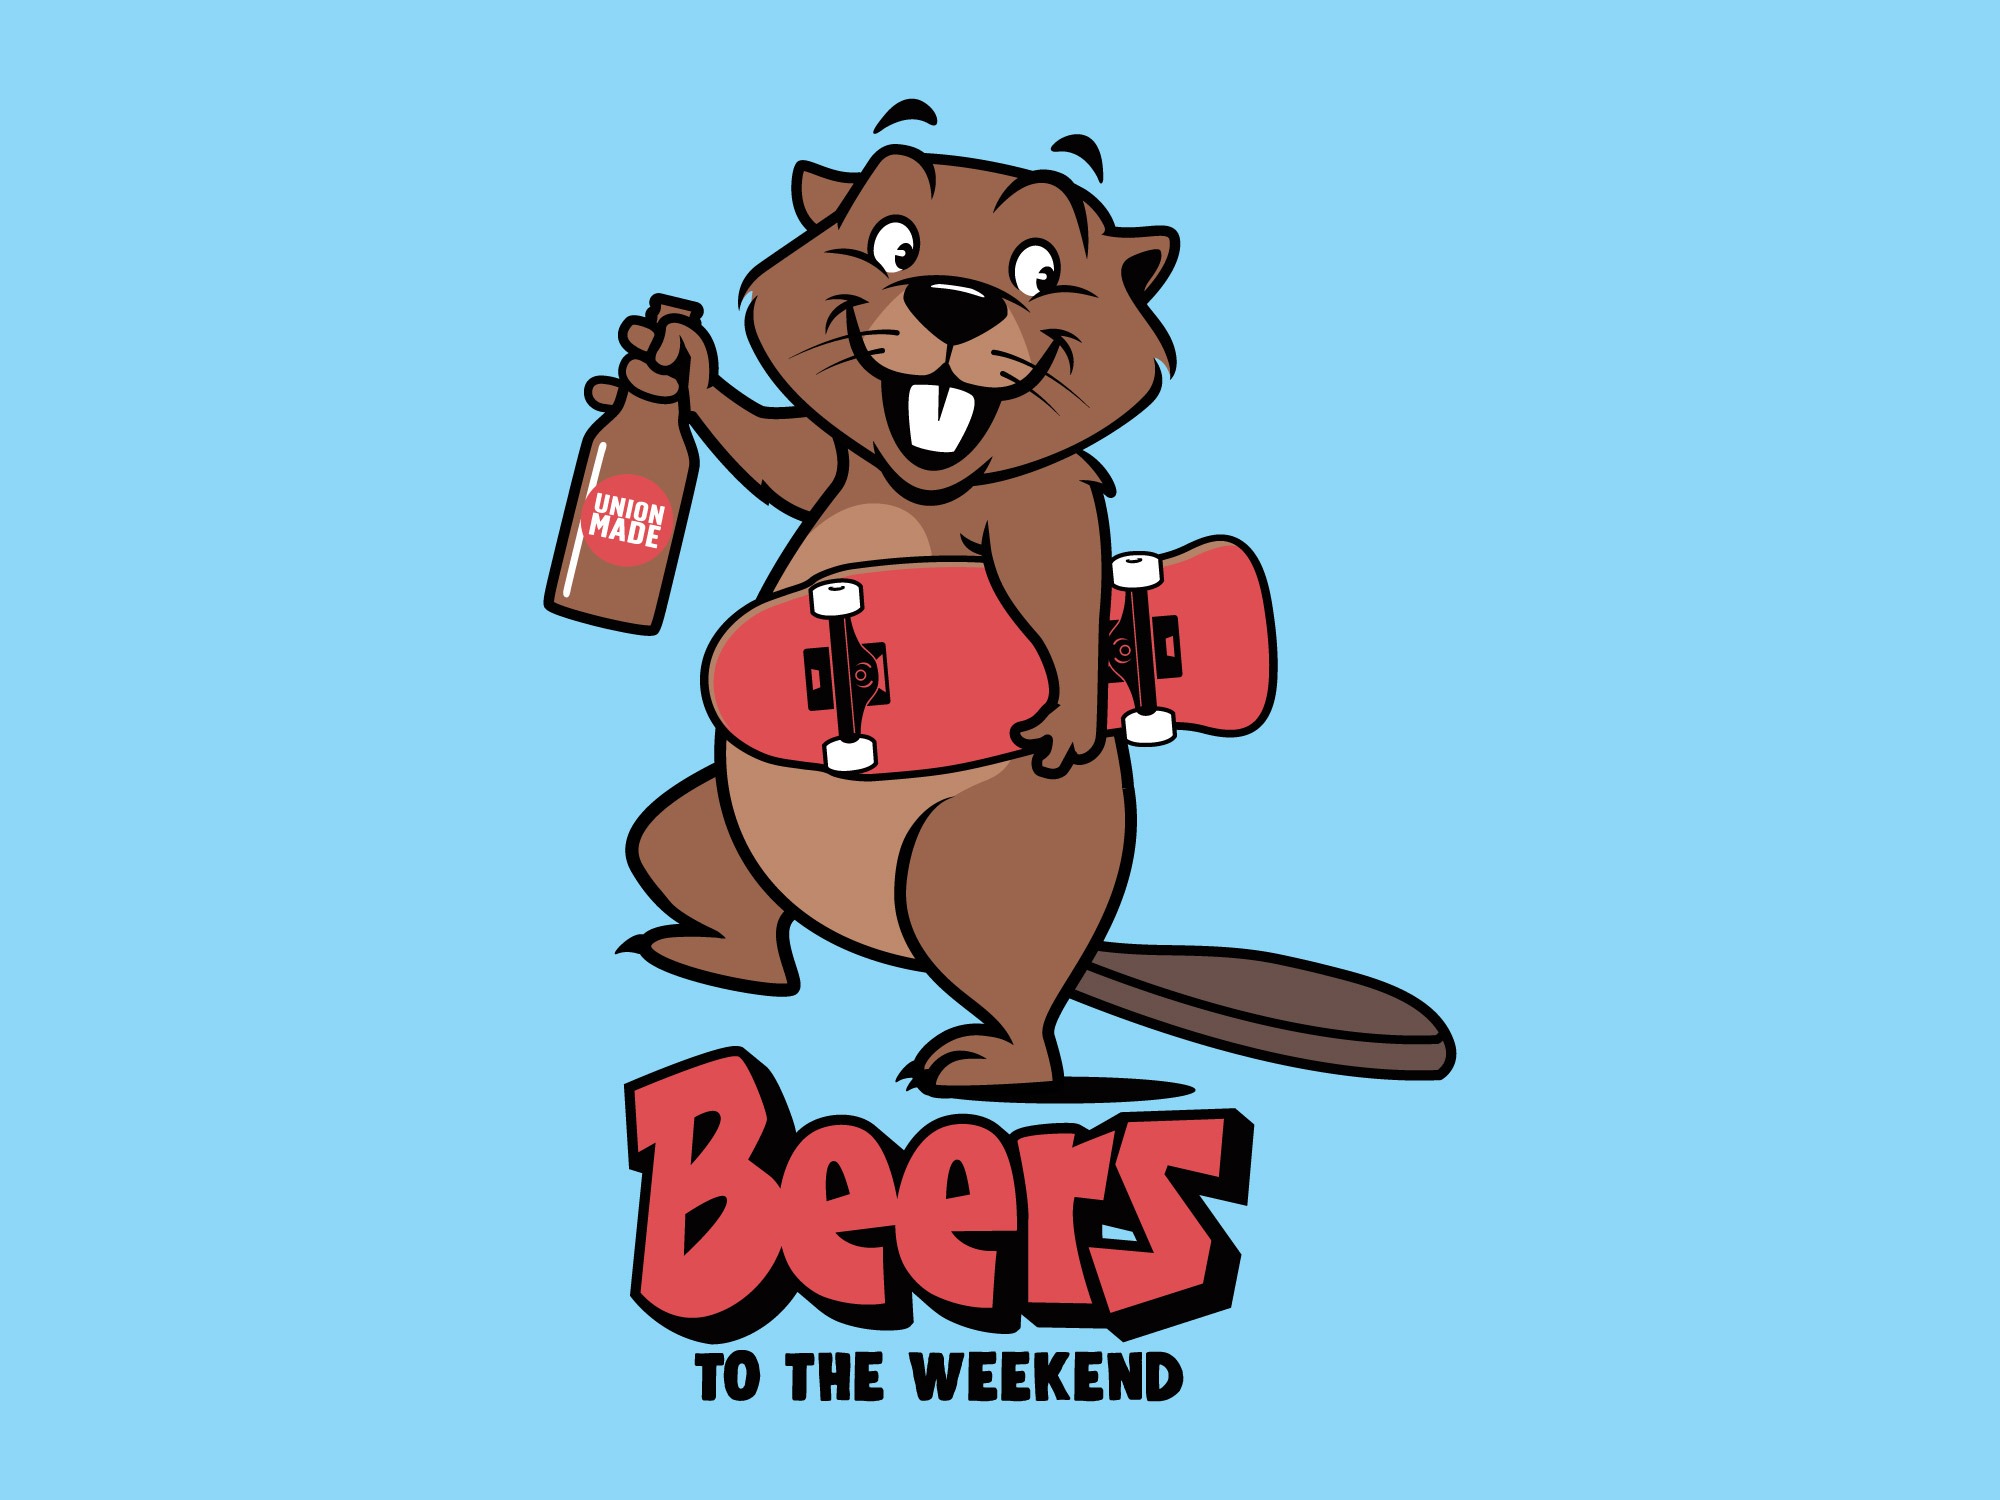 Beers to the weekend!